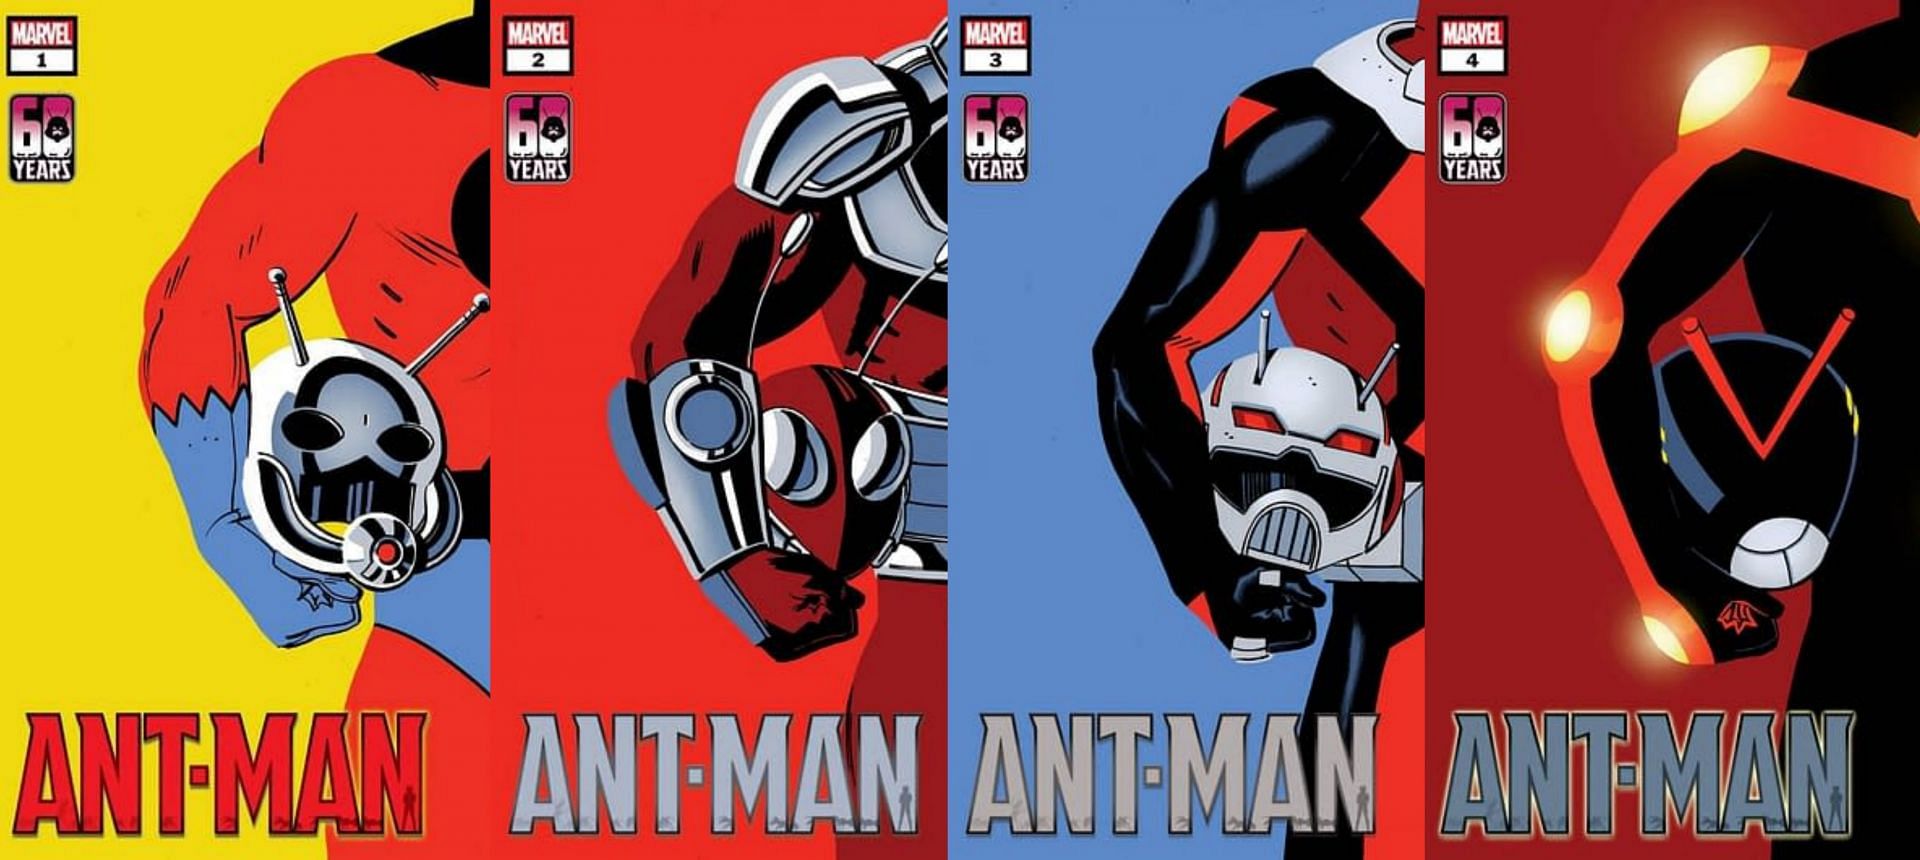 Ant-Man (Image via Marvel Comics)